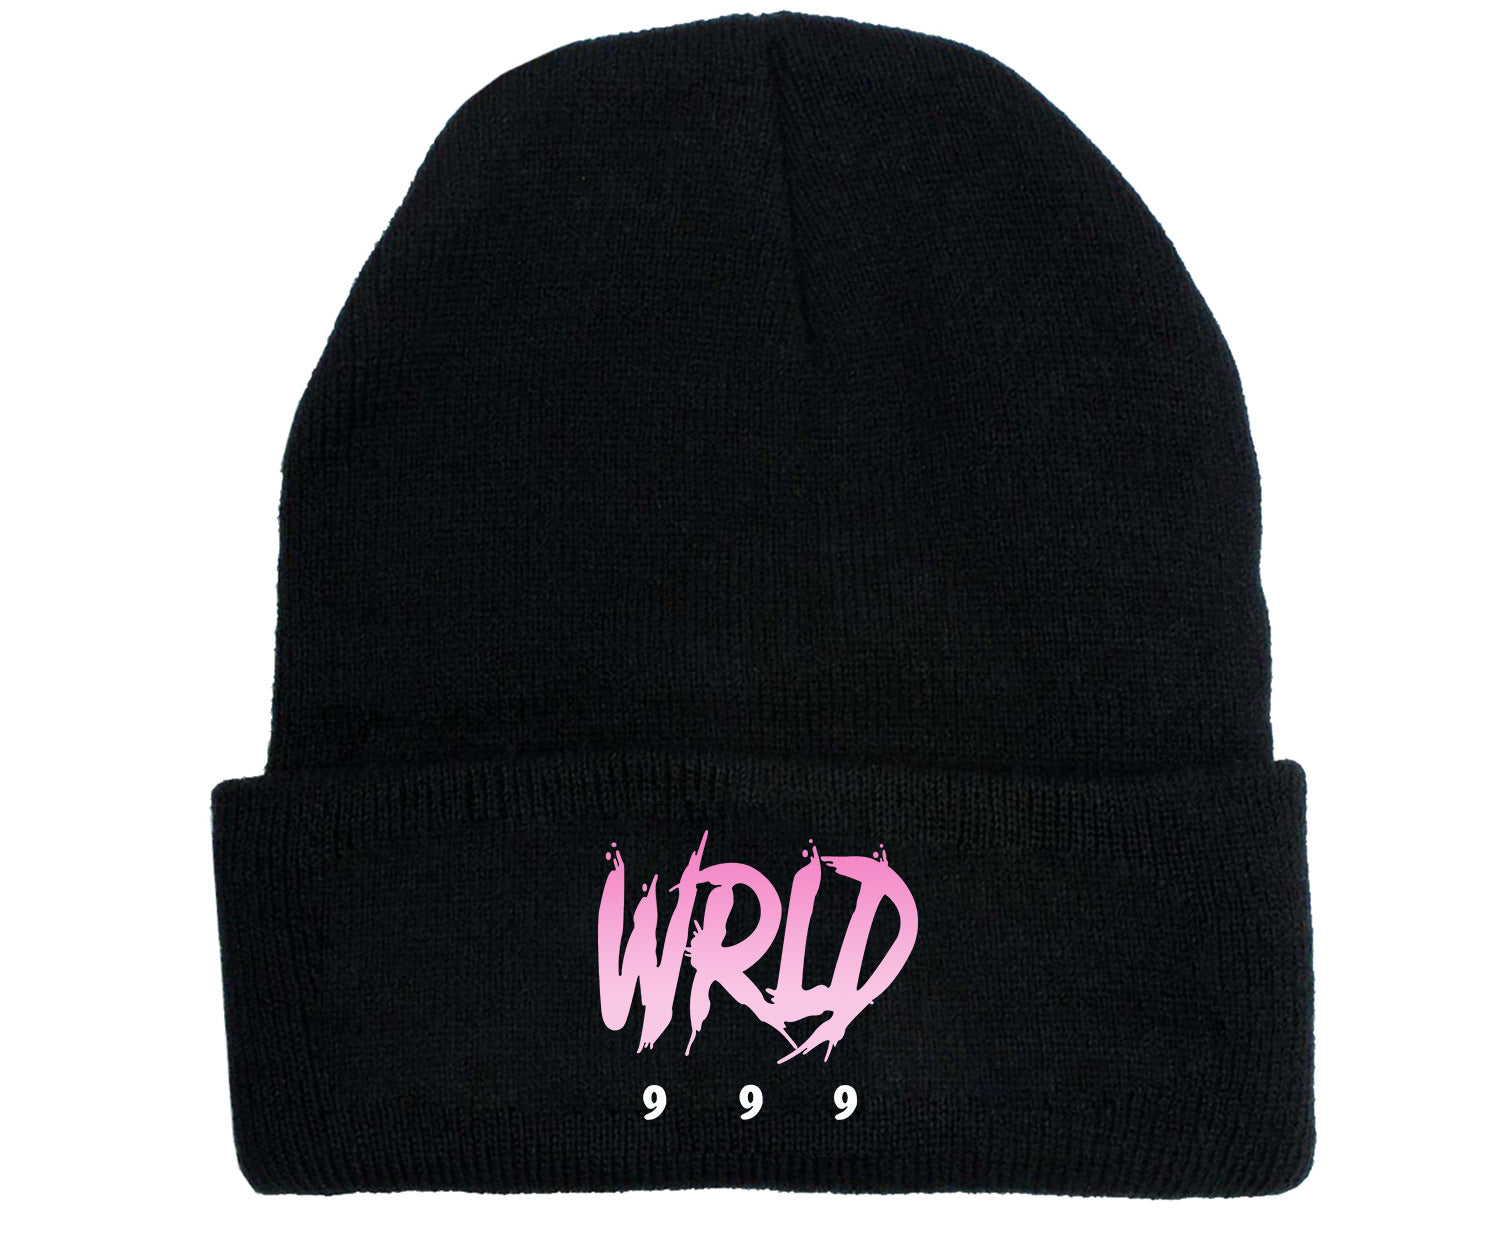 Juice Wrld 999 Fashion knitted hat-Mortick